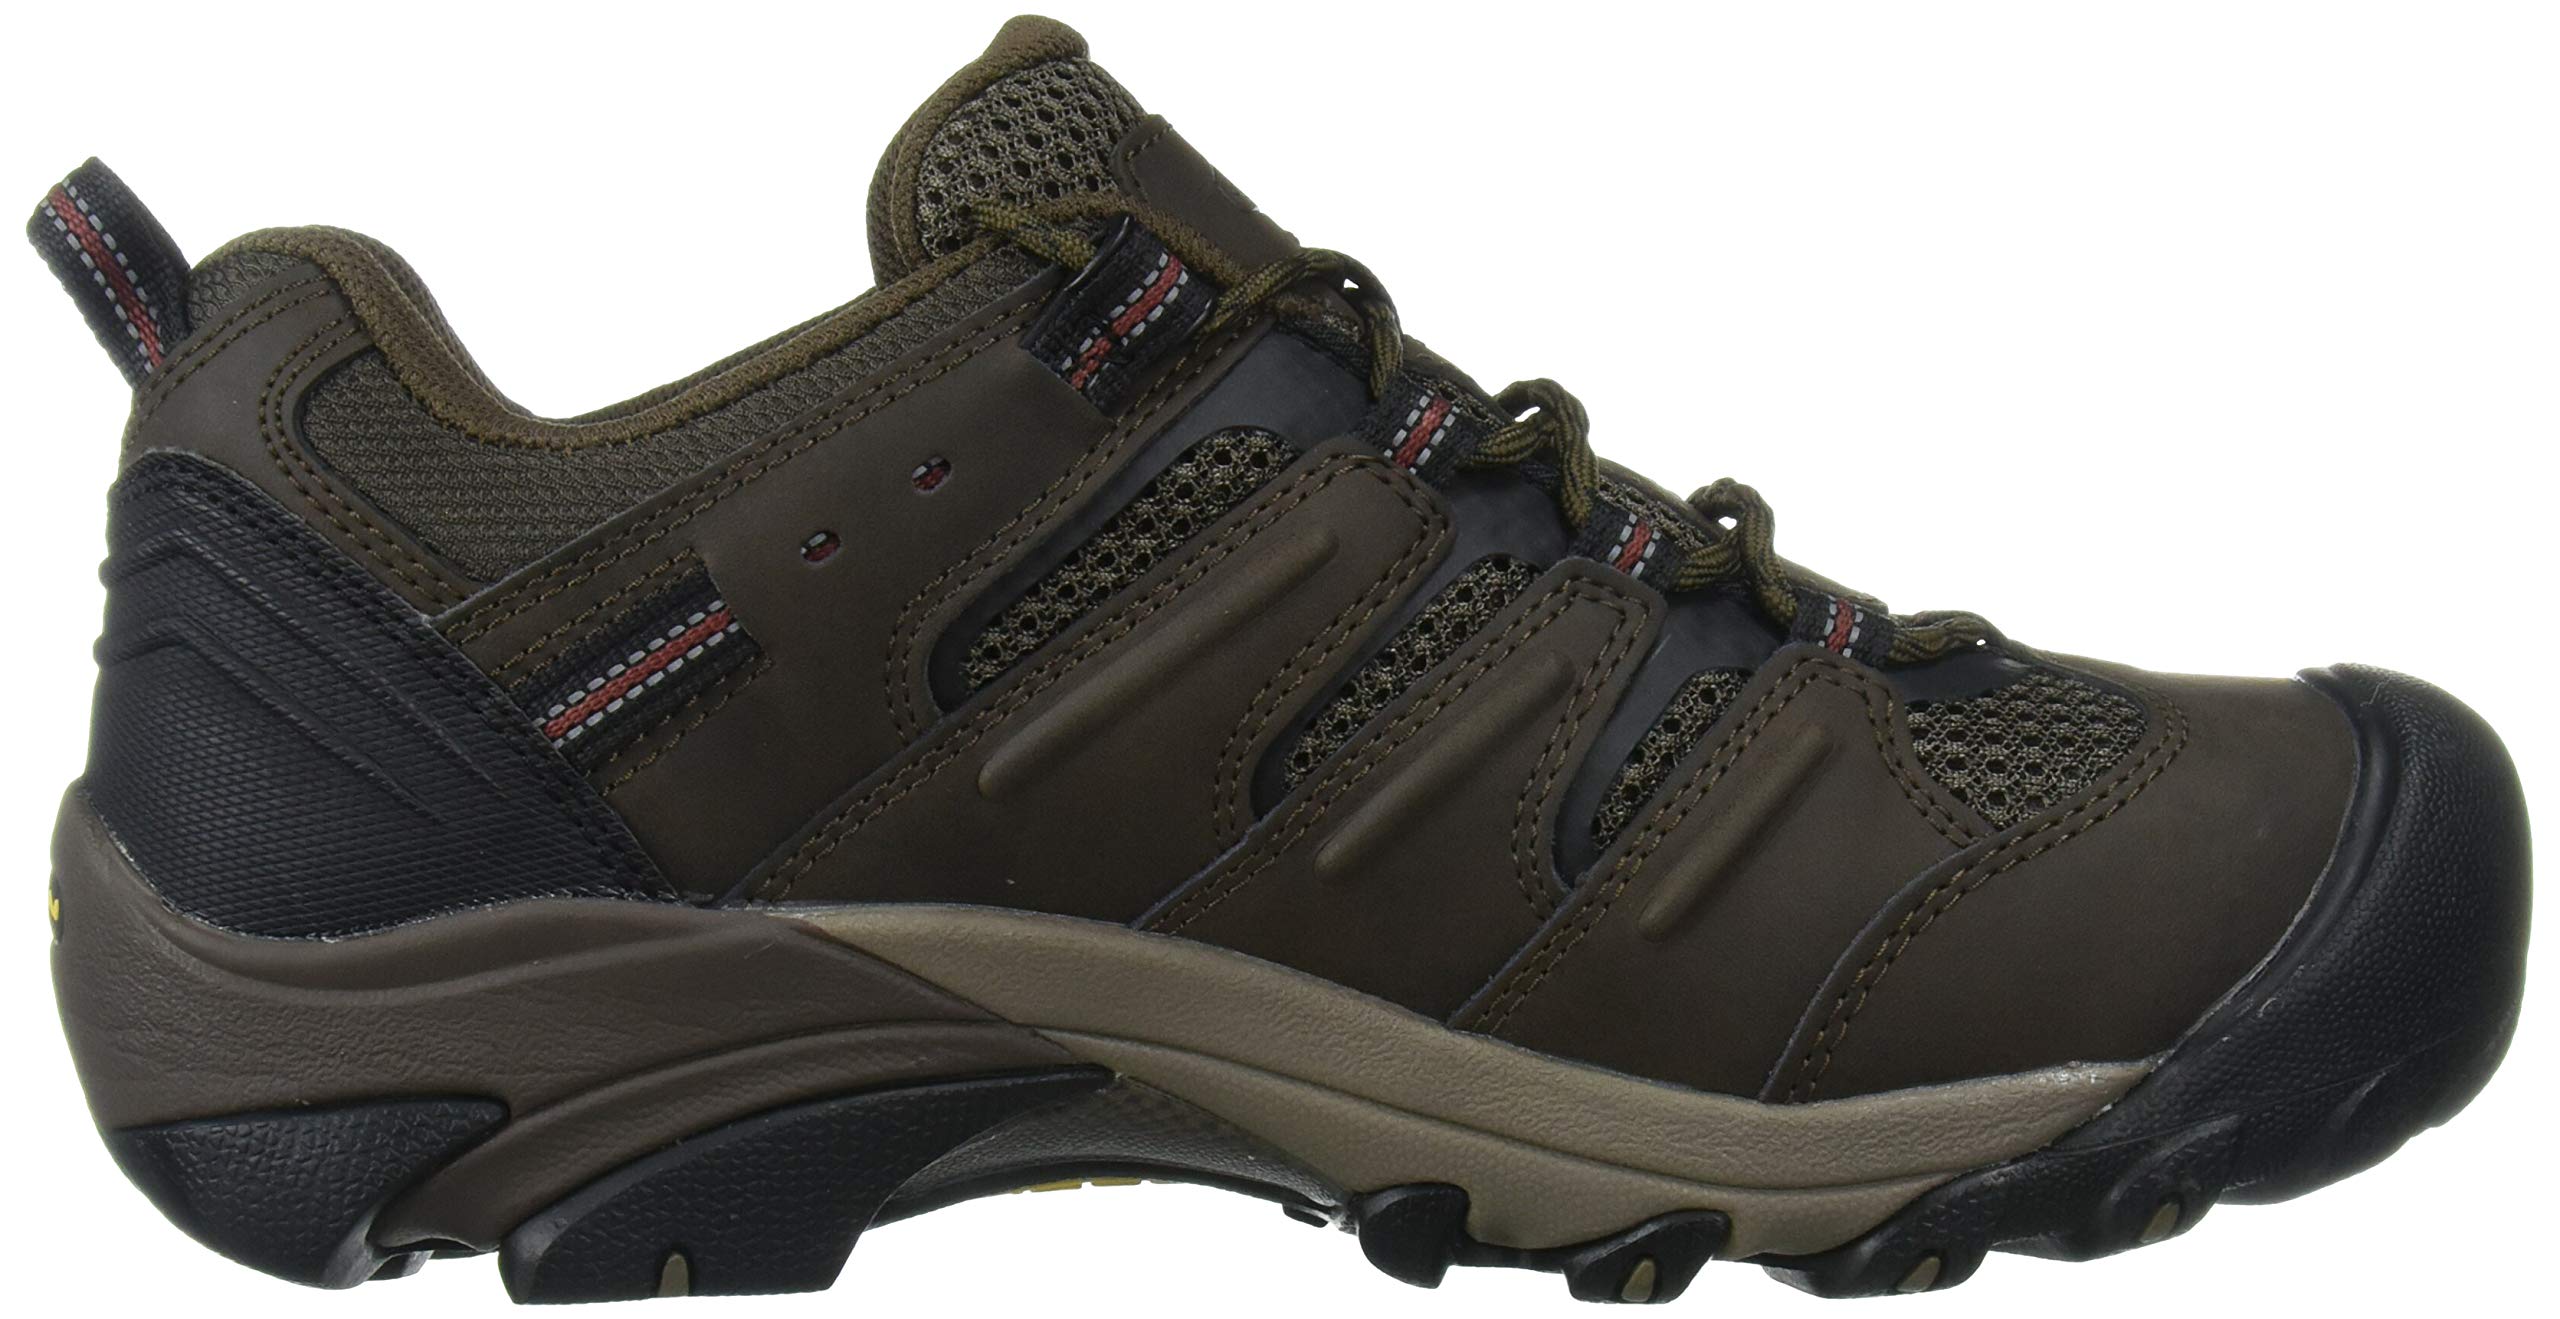 KEEN Utility Men's Lansing Low Steel Toe Work Shoe, Cascade Brown/Fired Brick, 9.5 Medium US